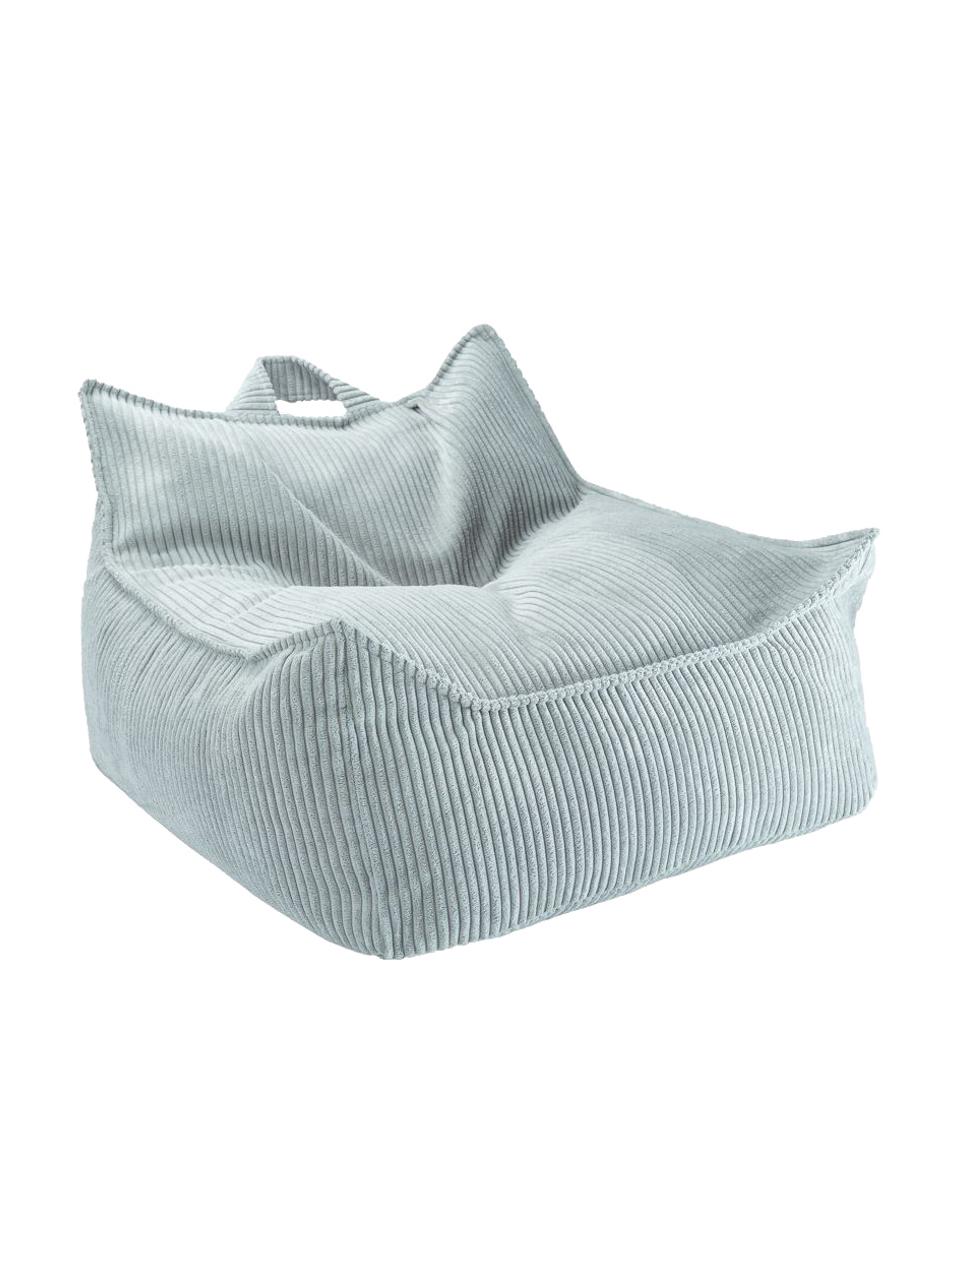 Kinder-Sitzsack Sugar aus Cord, Bezug: Cord (100 % Polyester), Cord Mintgrün, B 70 x T 80 cm